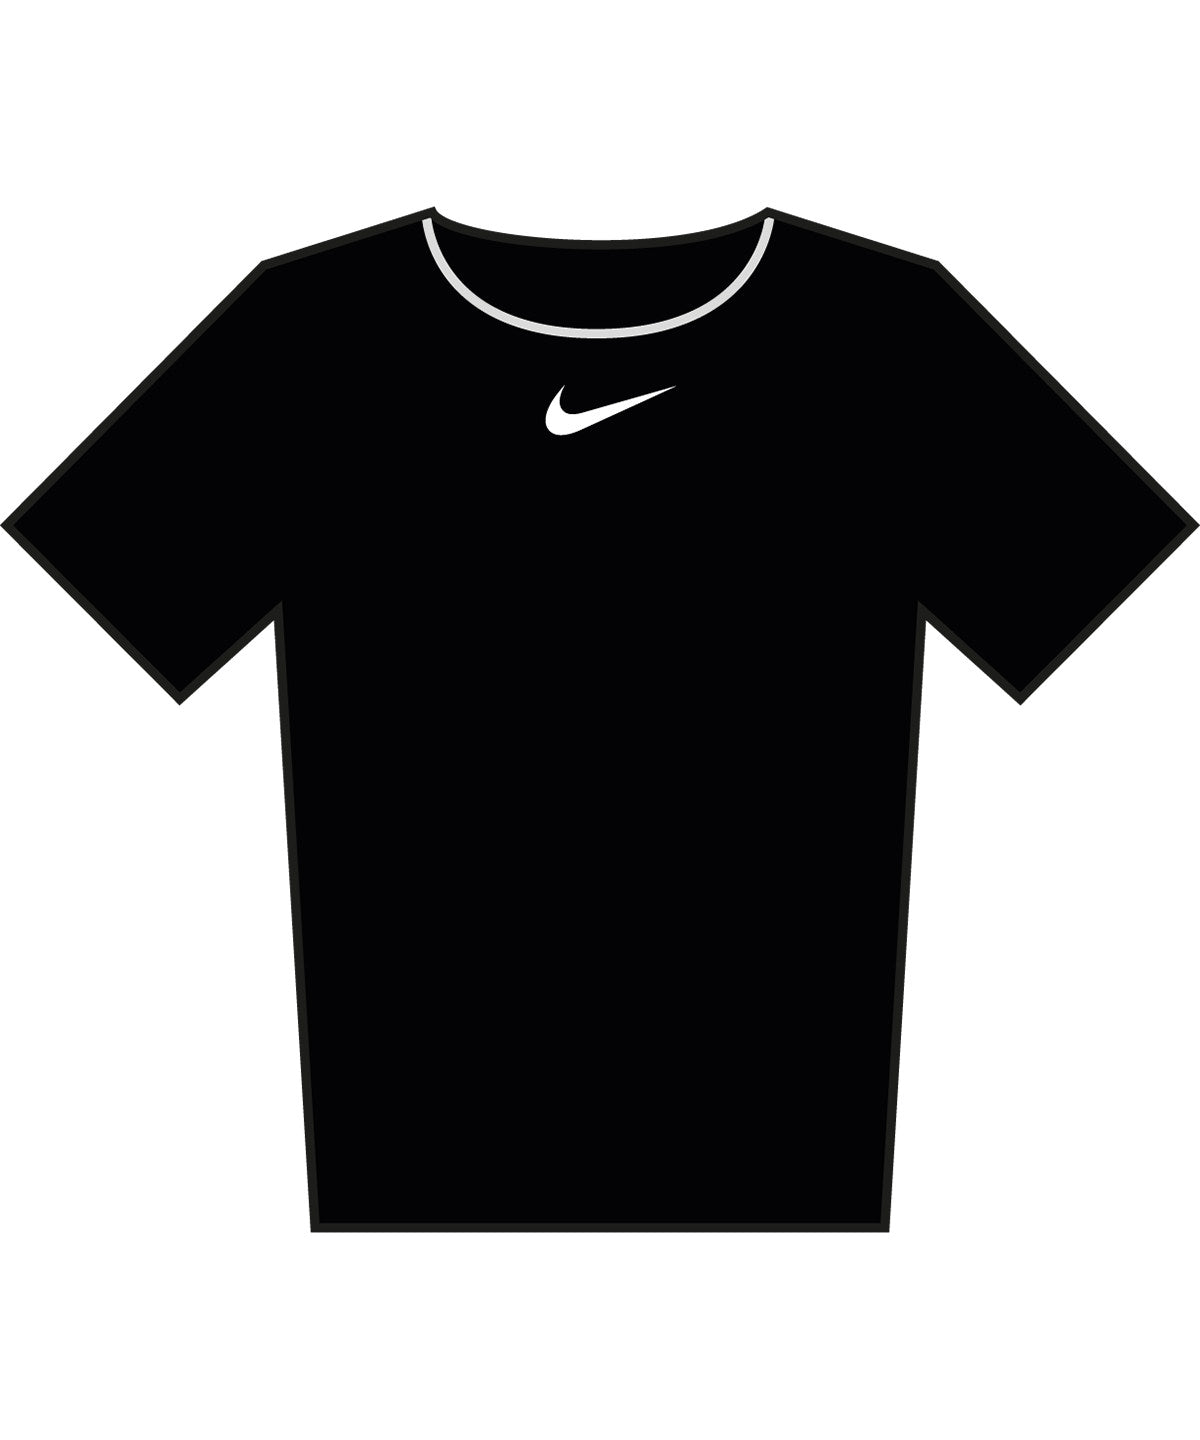 Women’s Nike One Dri-FIT Short Sleeve Slim Top